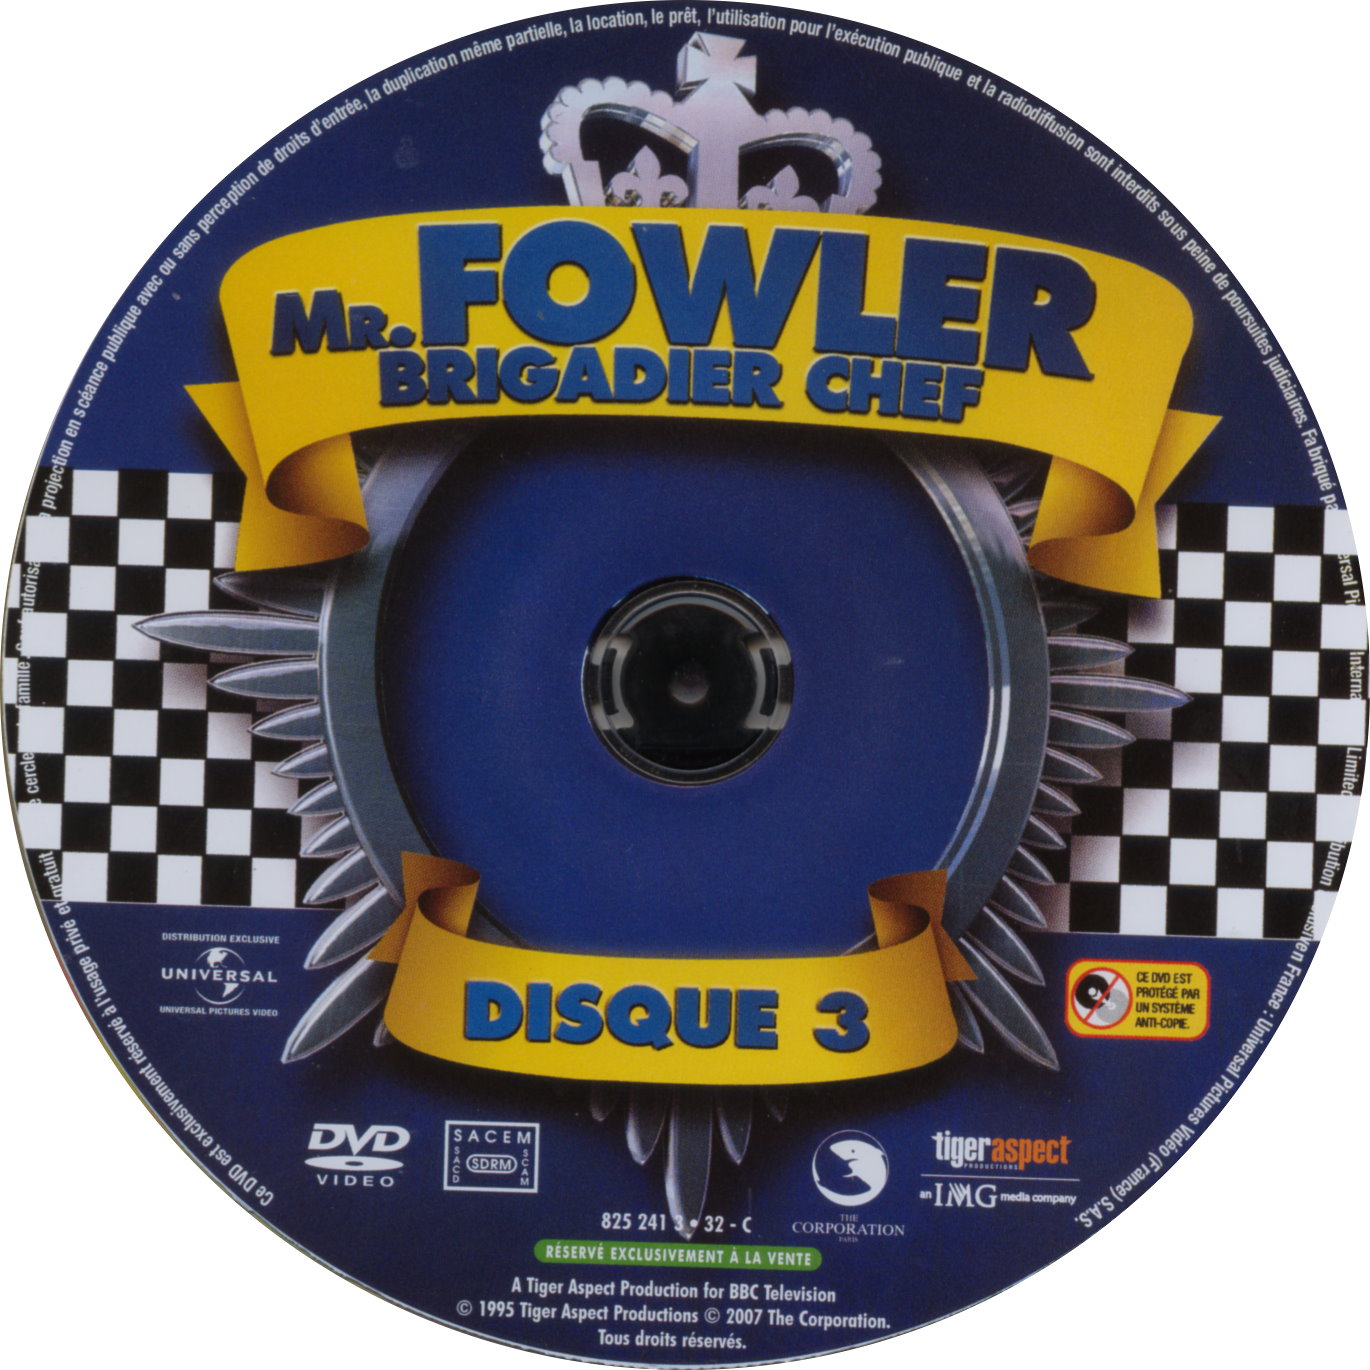 Mr Fowler brigadier chef DVD 1